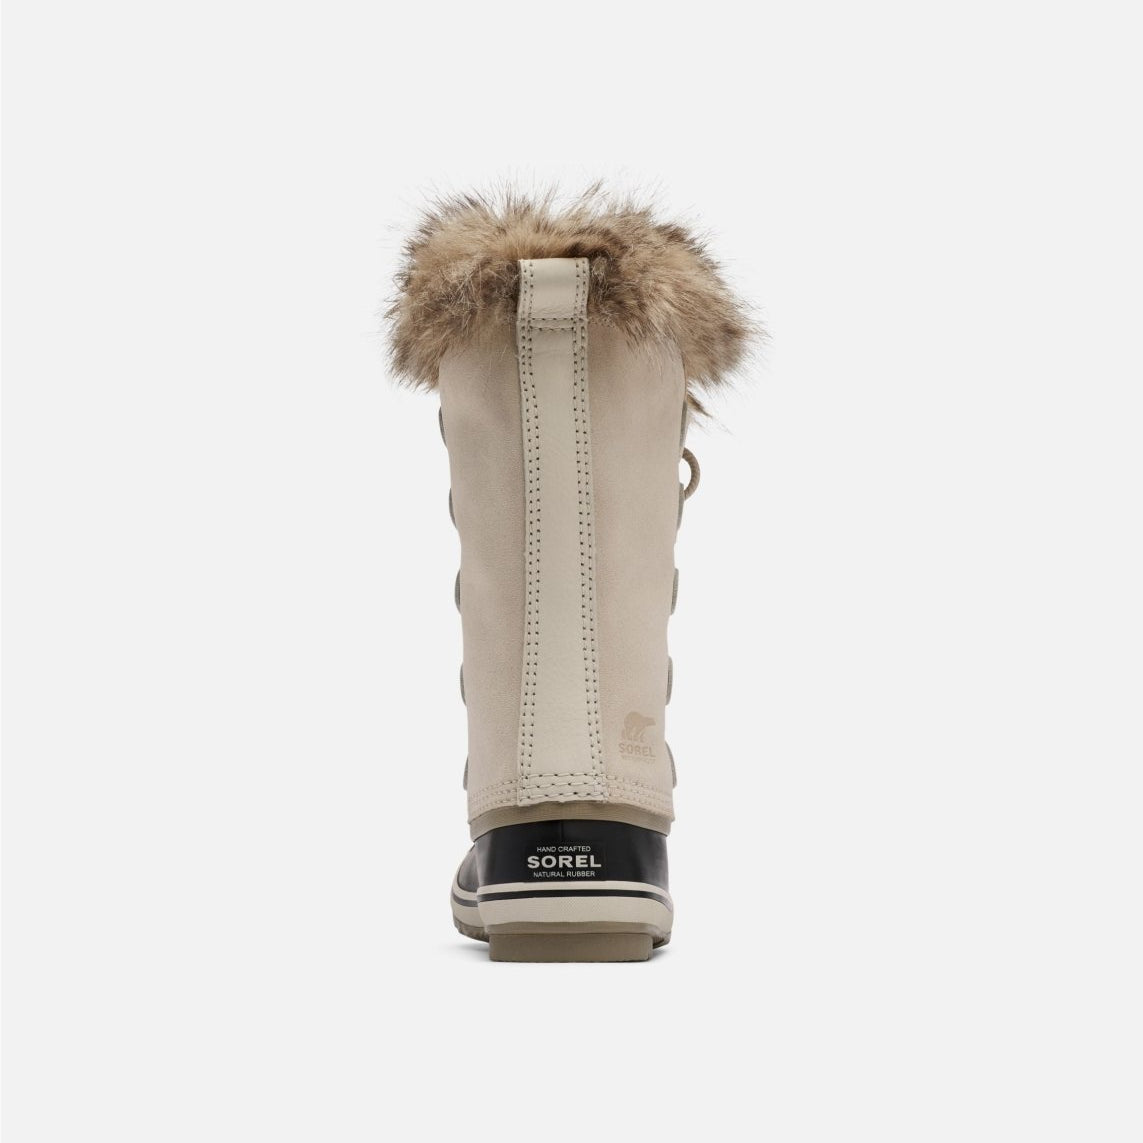 Sorel Women's Joan of Arctic Waterproof Winter Boot - Fawn/Omega Taupe